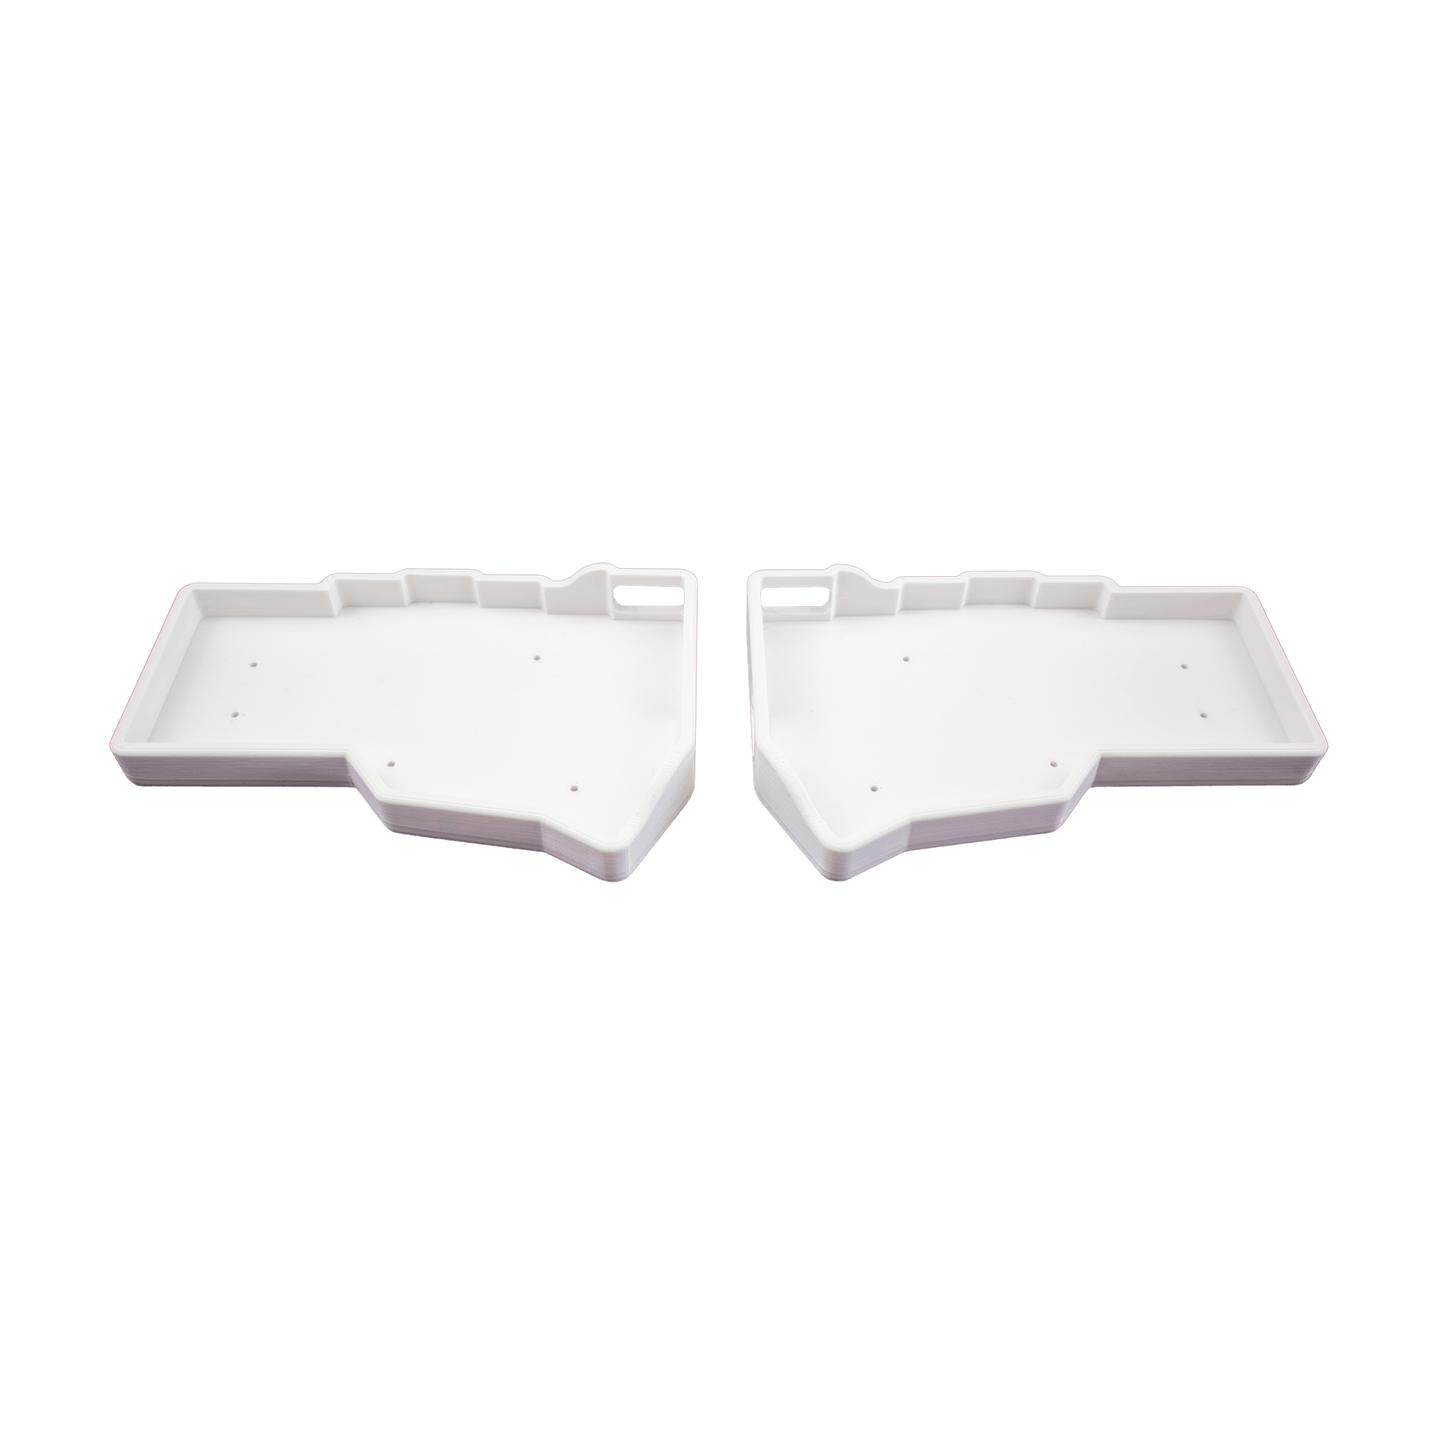 3D Printed Helidox Corne Case White Low Profile